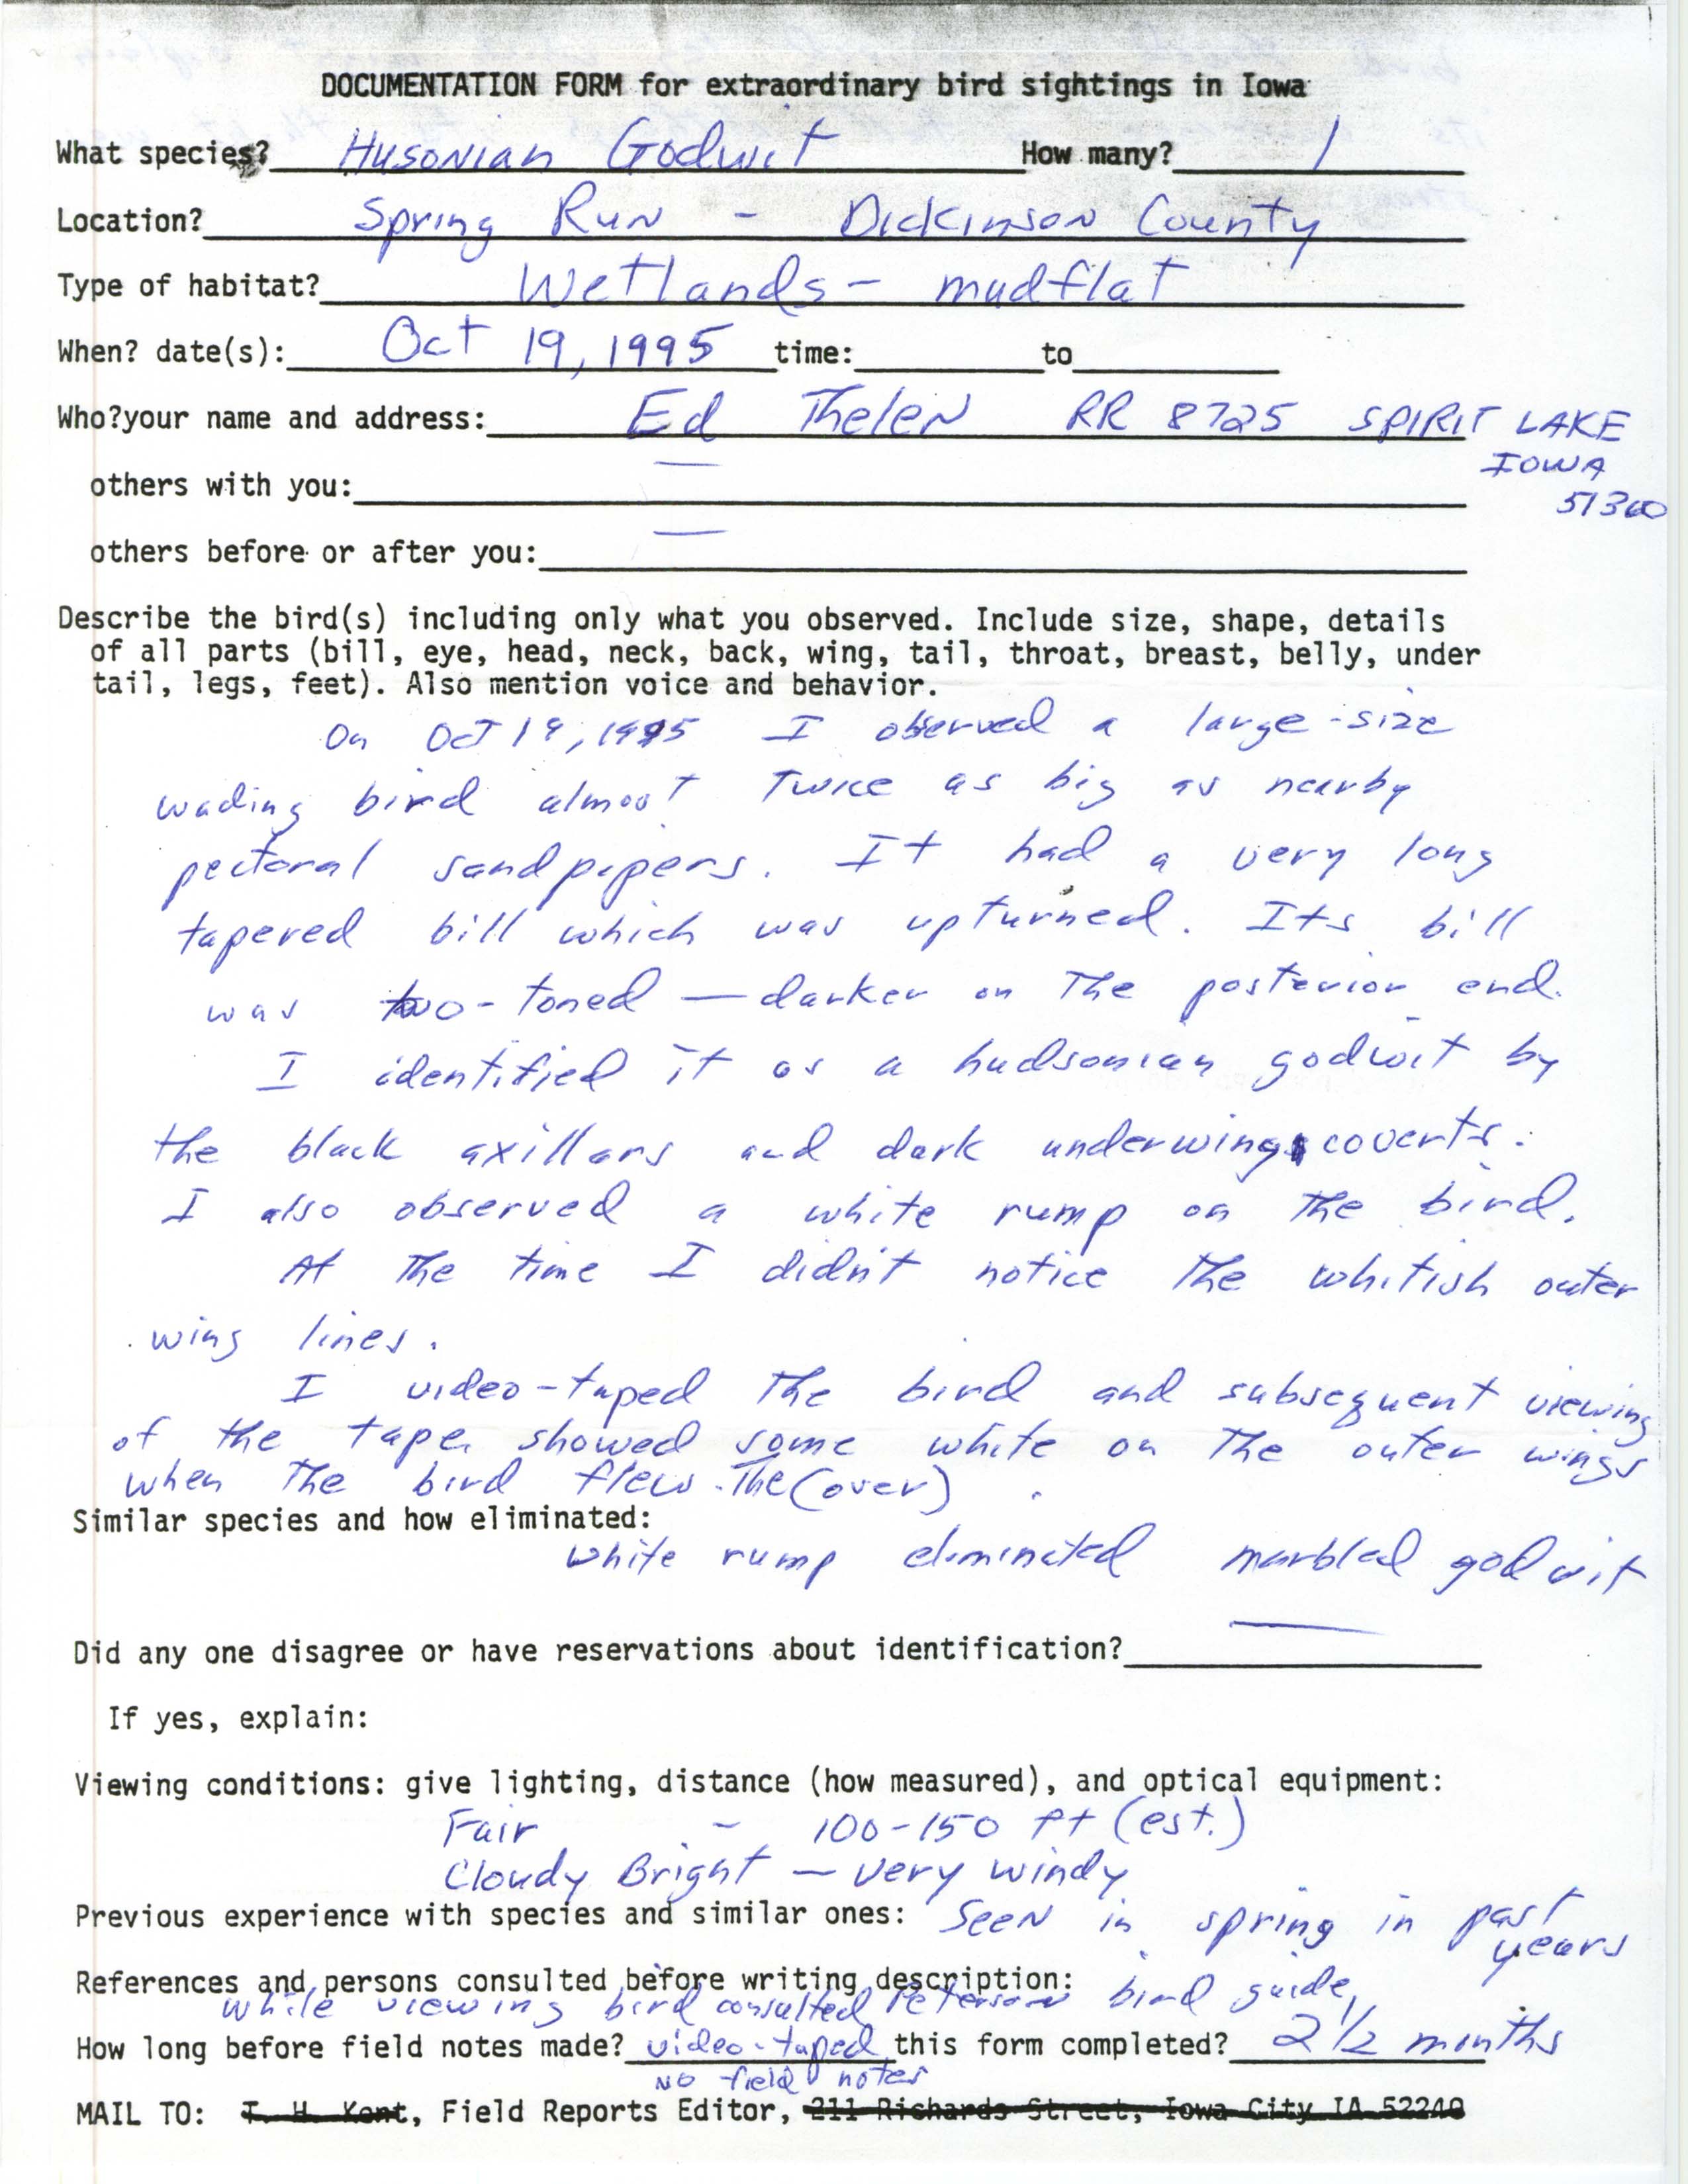 Rare bird documentation form for Hudsonian Godwit at Spring Run, 1995